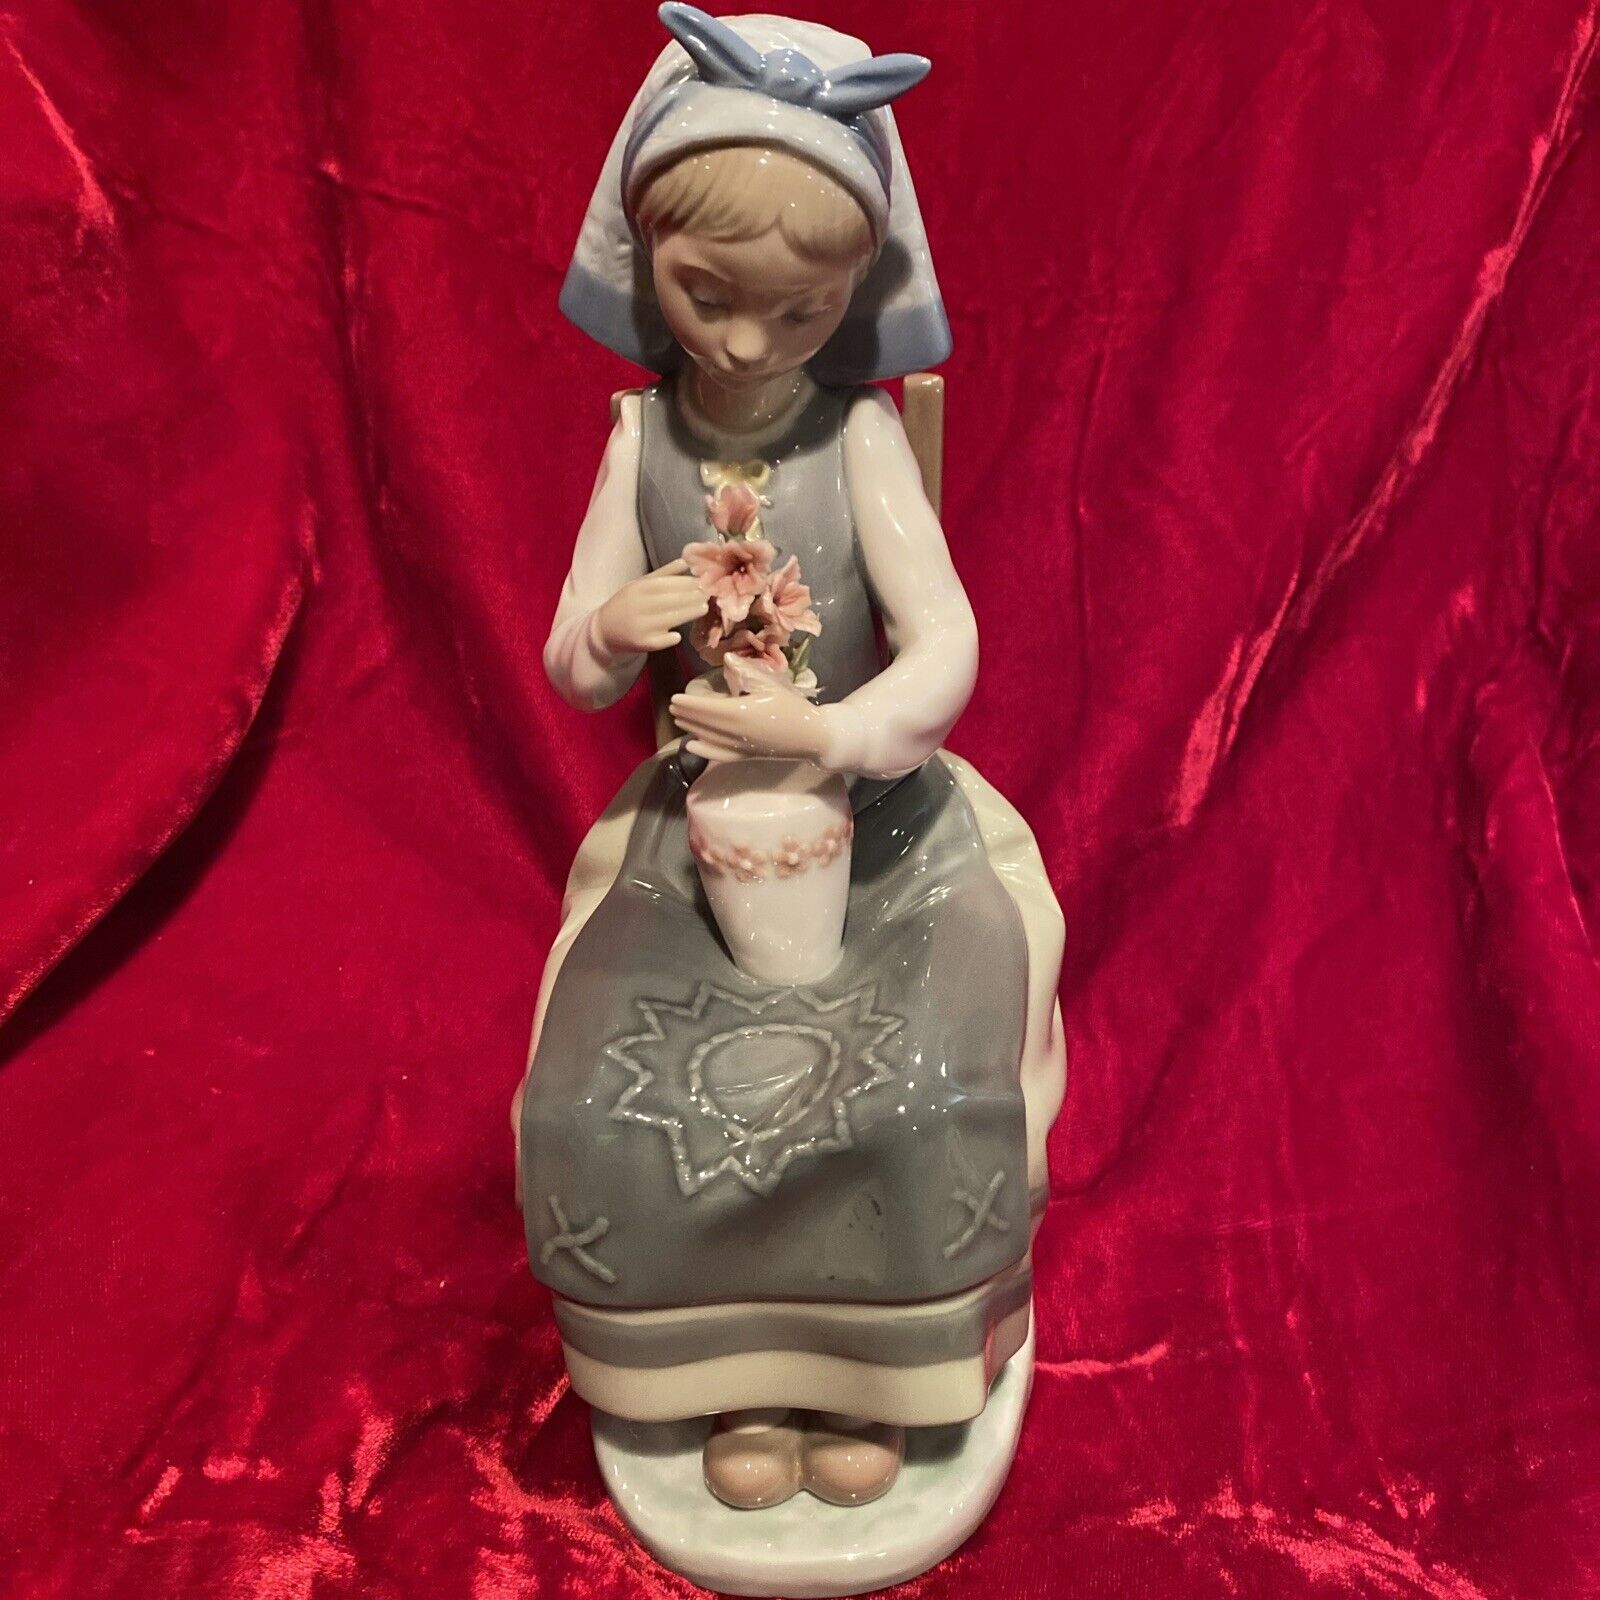 Lladro -Flower Harmony figurine- (flowers detached from figurine)- #1418- EX